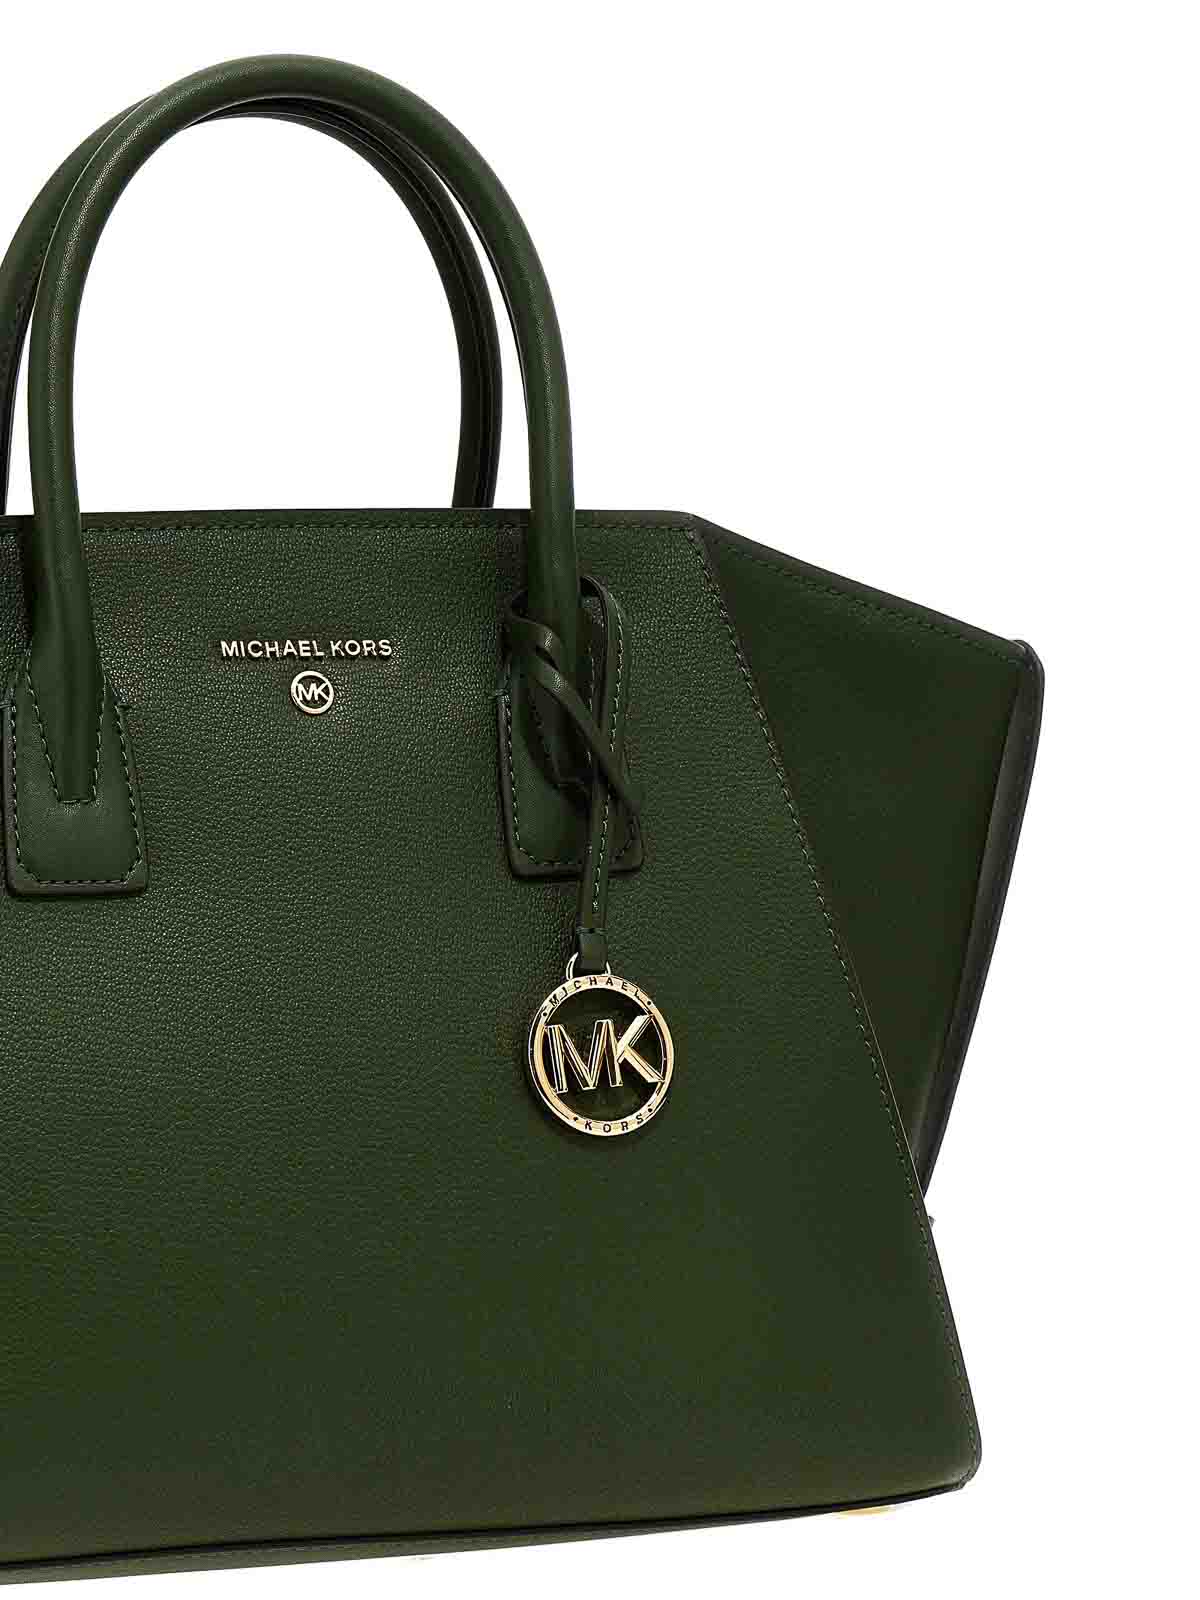 Shop Michael Kors Women's Bags